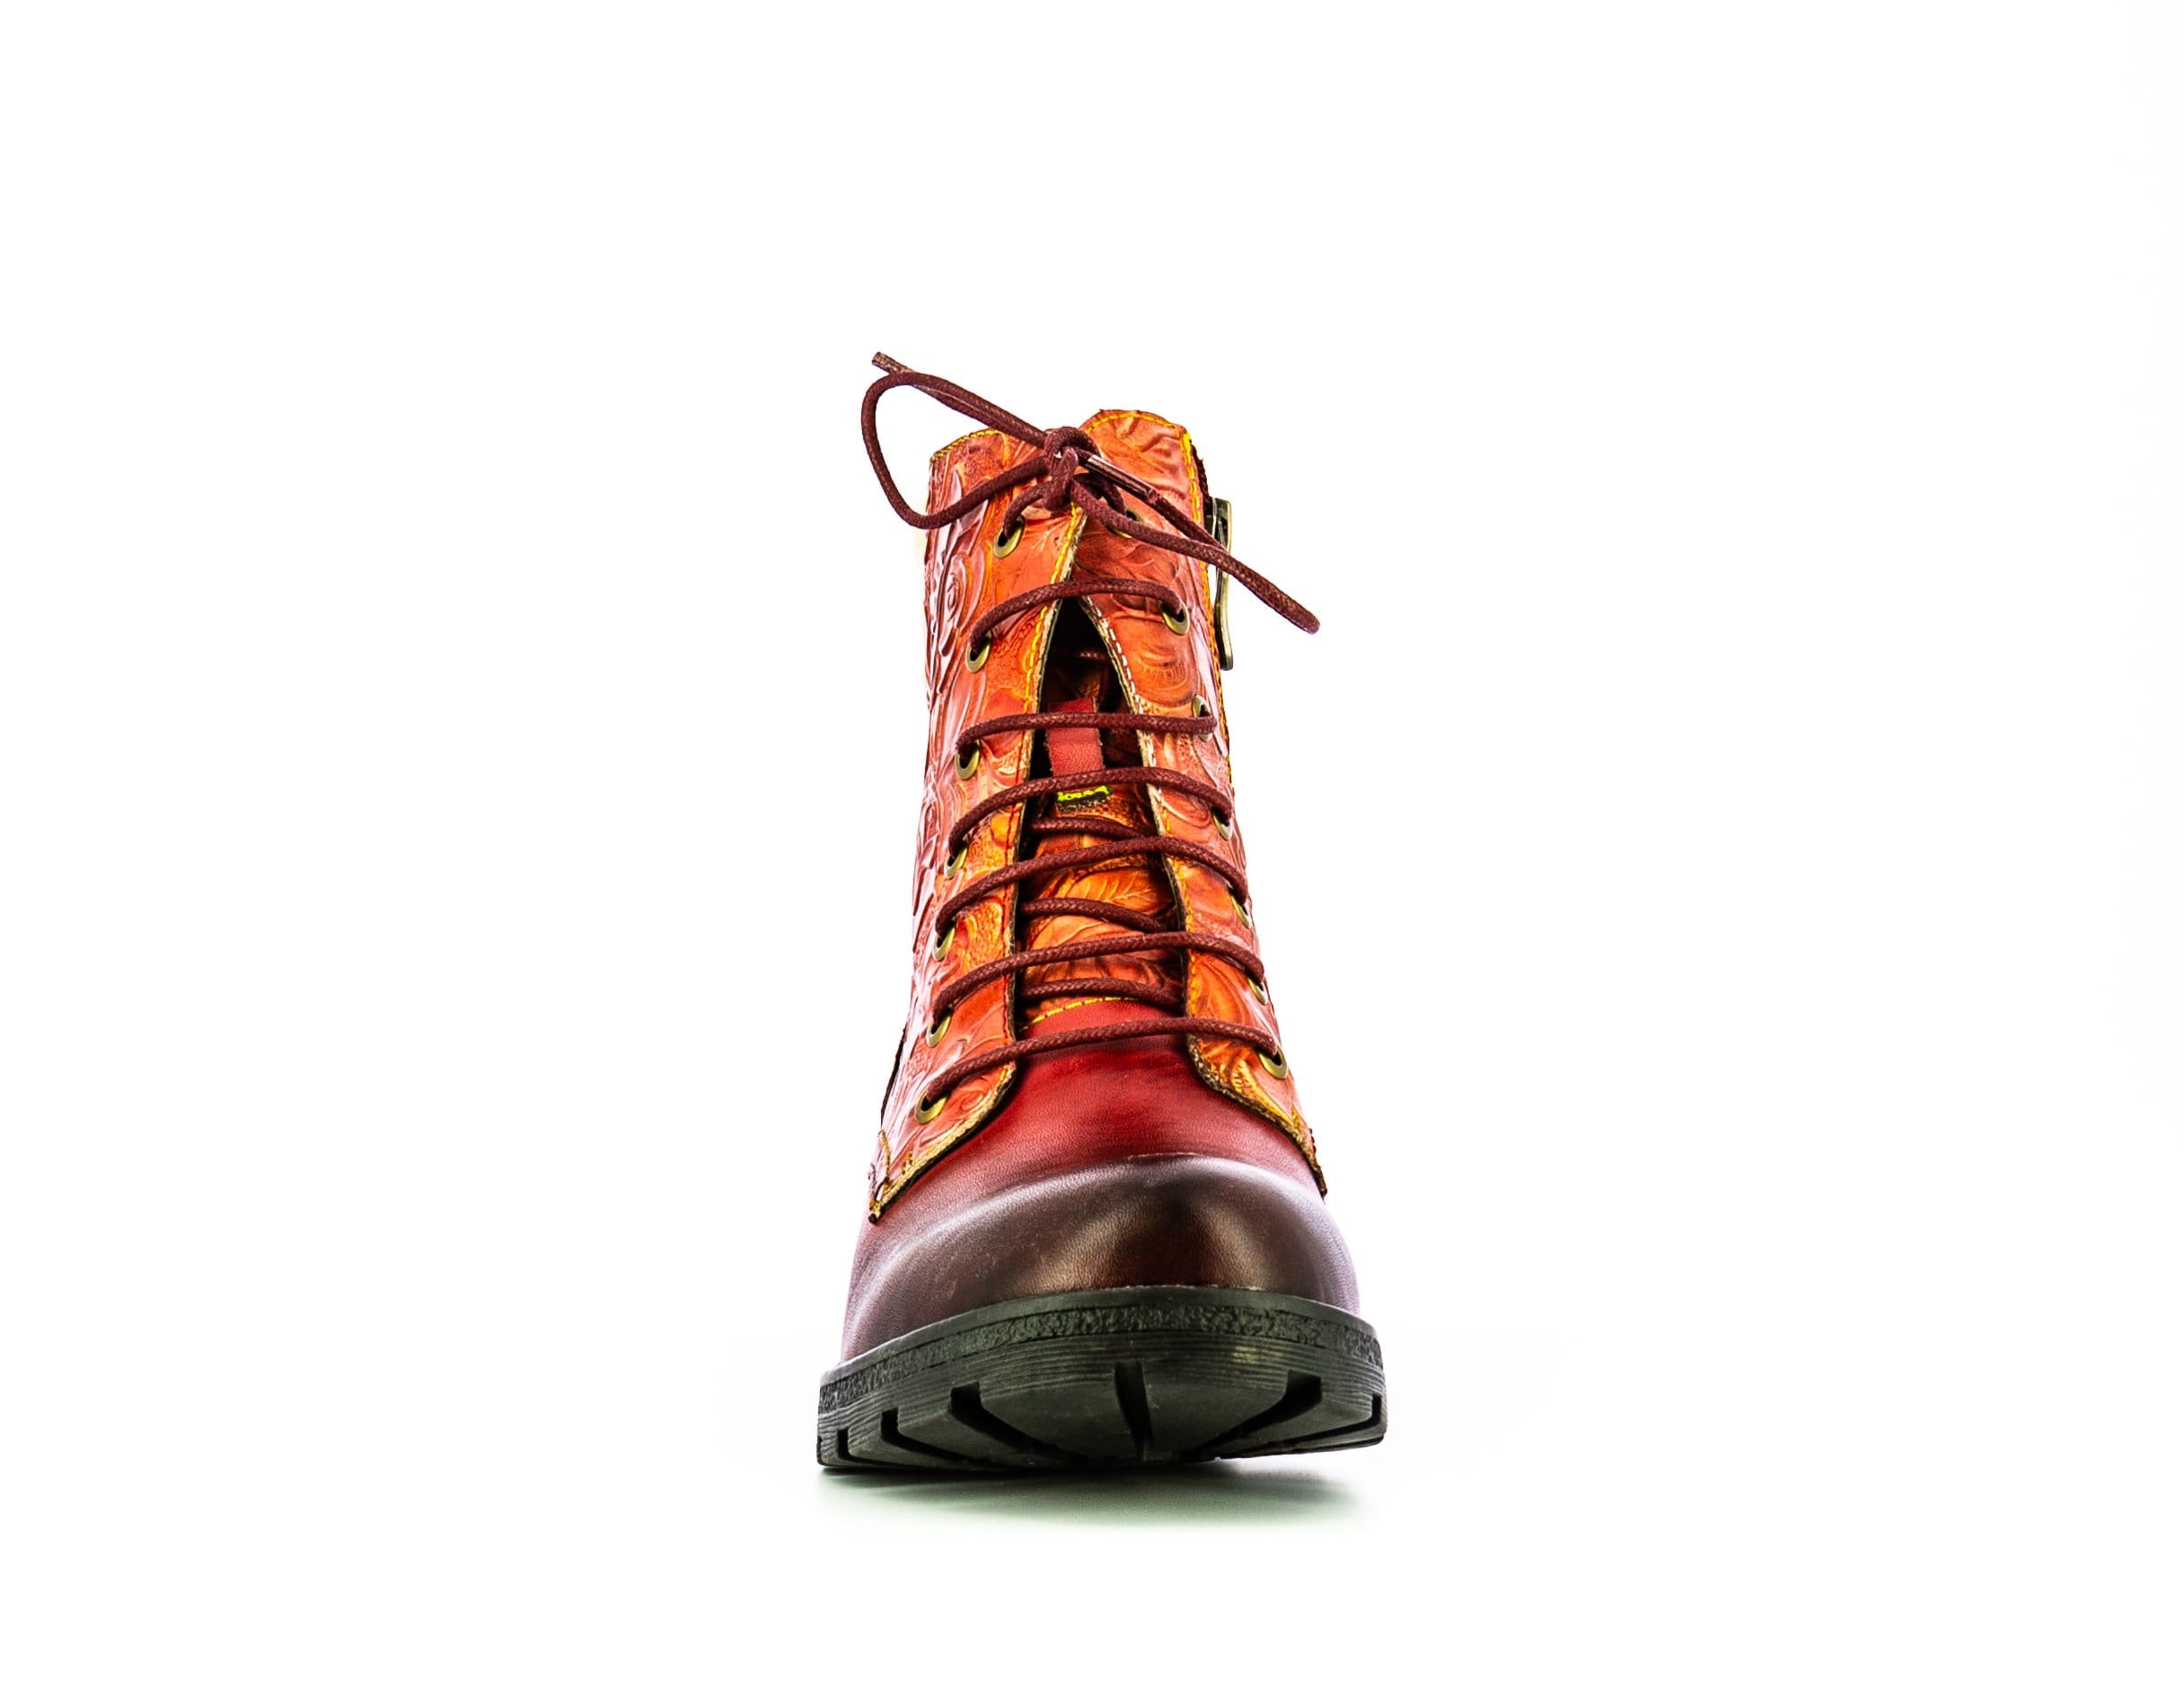 Schuh COCRAILO 19 - Boots